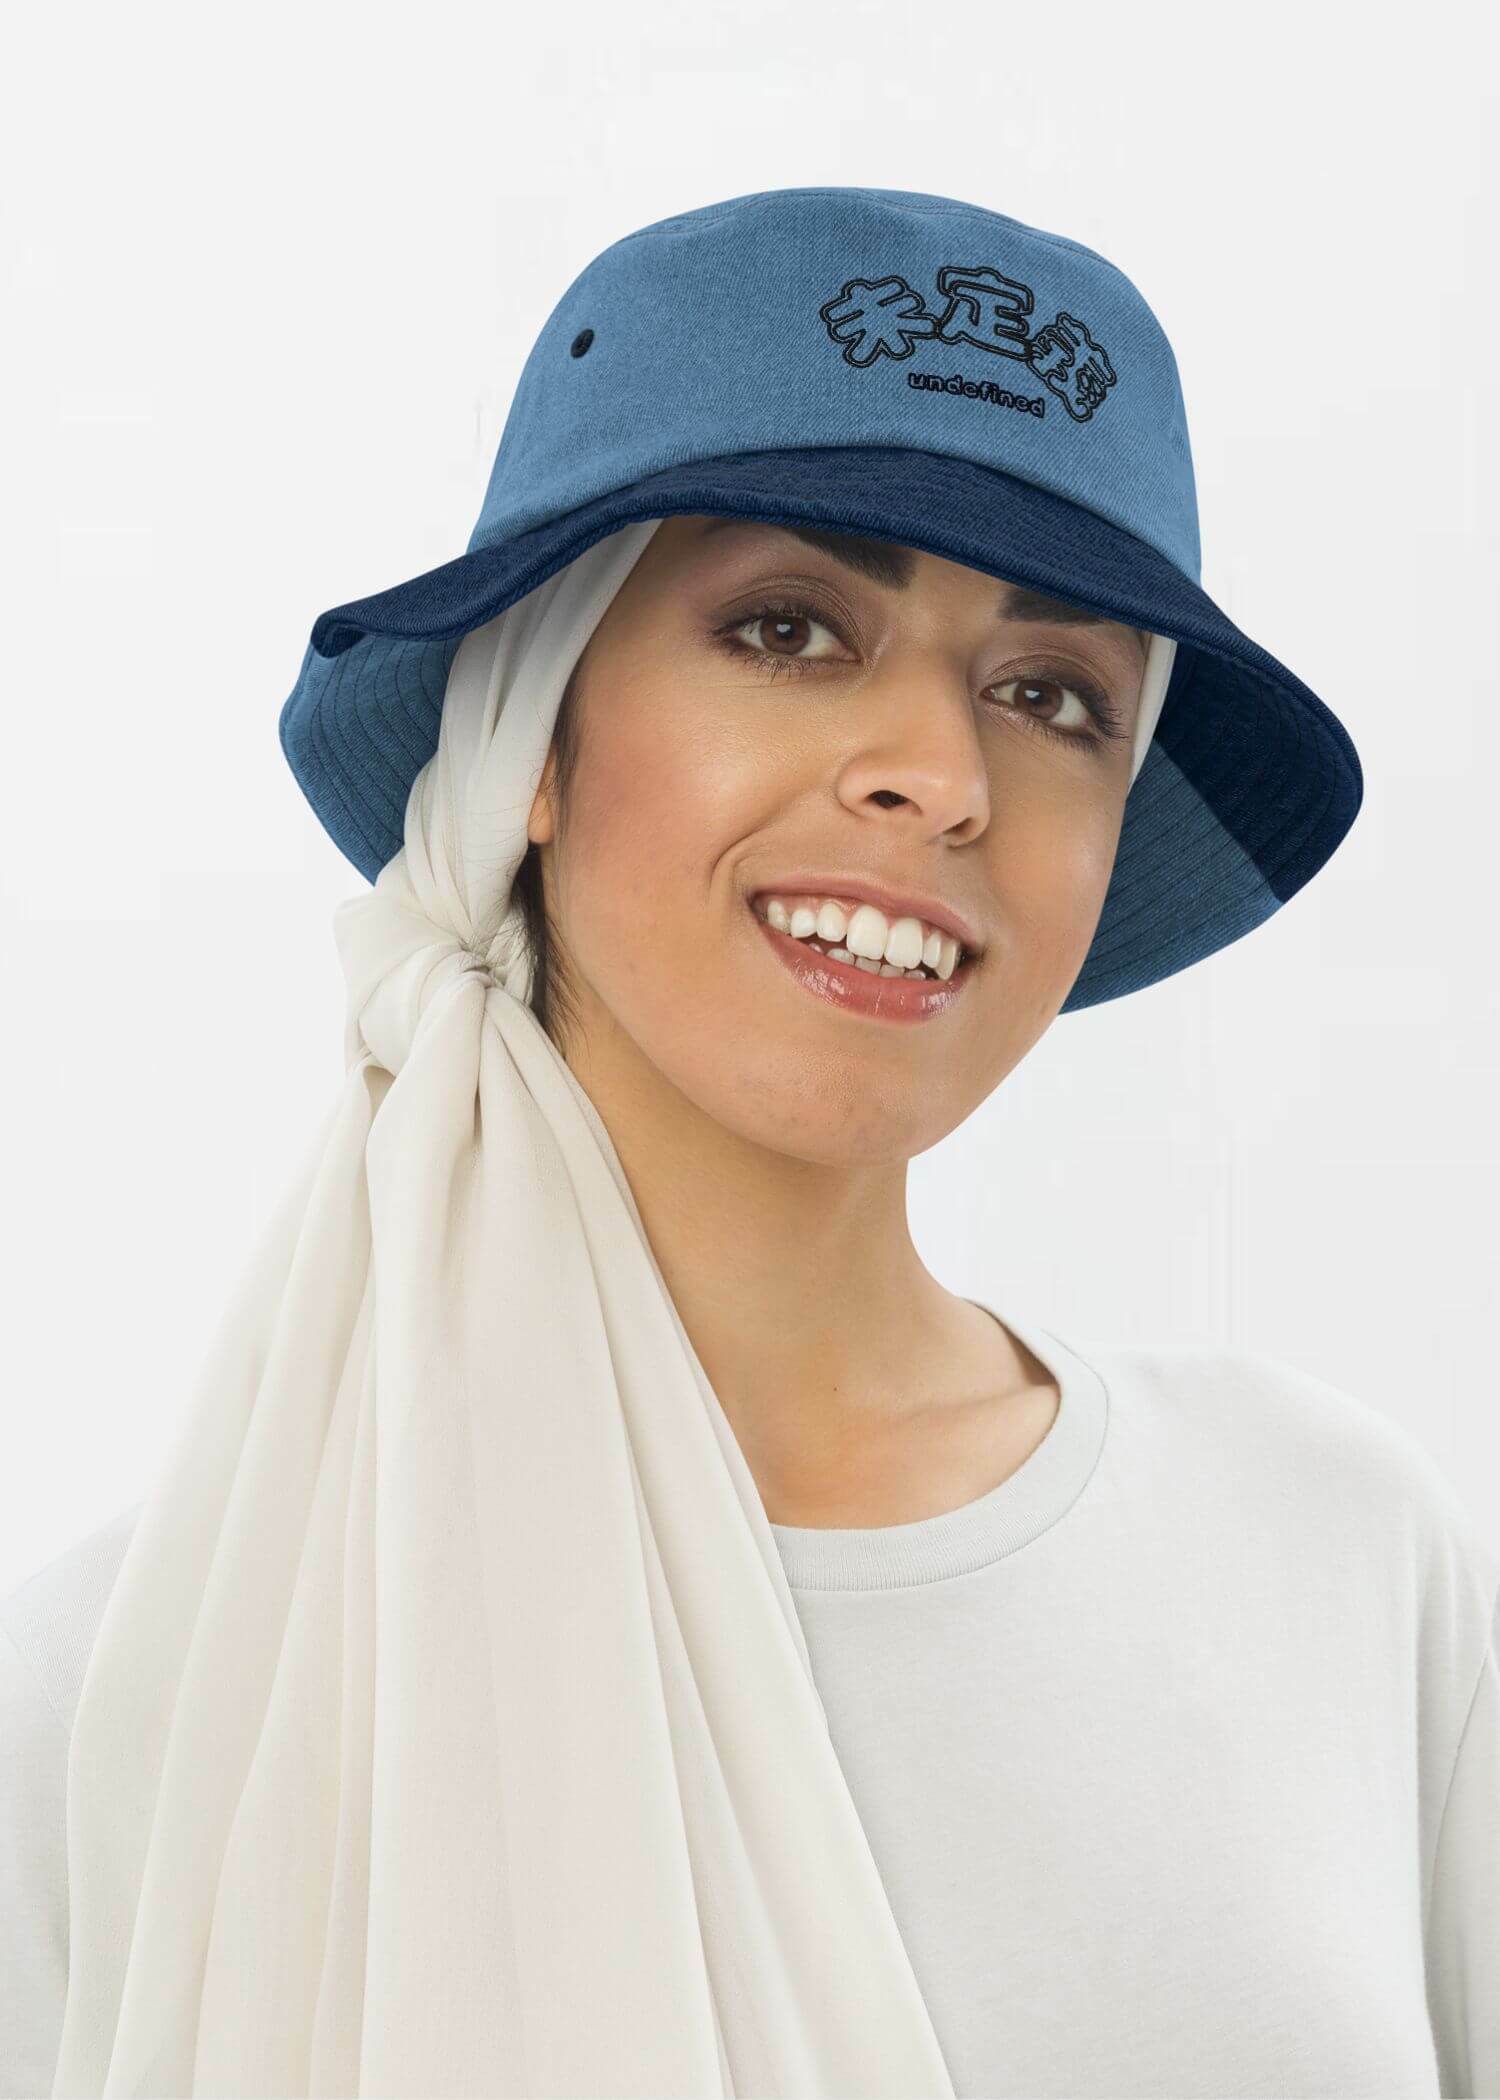 Denim miteigi Undefined Logo Bucket Hat miteigi Logo Branded product item unisex anywear Women’s Men’s 100% Cotton sunshade foldable hats for man woman in patchwork blue Mens Womens headwear